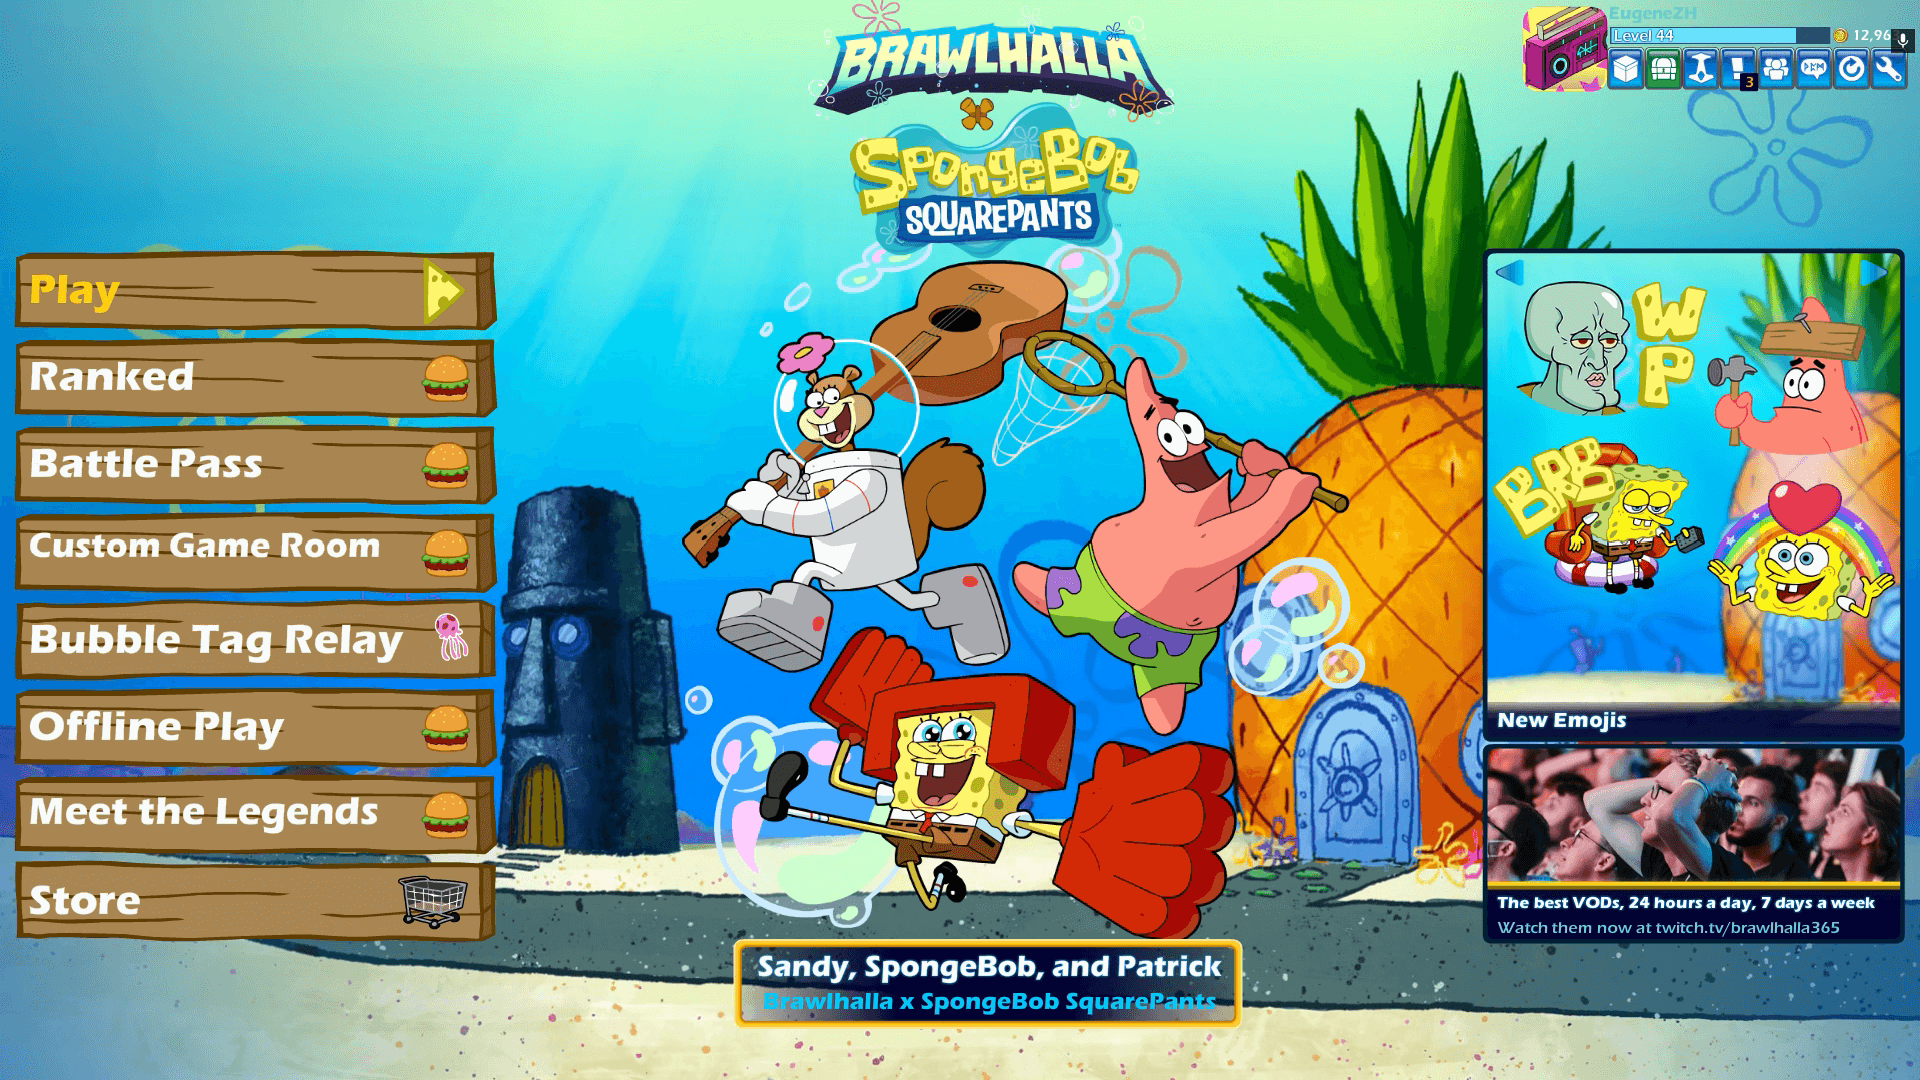 Brawlhalla SpongeBob Event Is Here